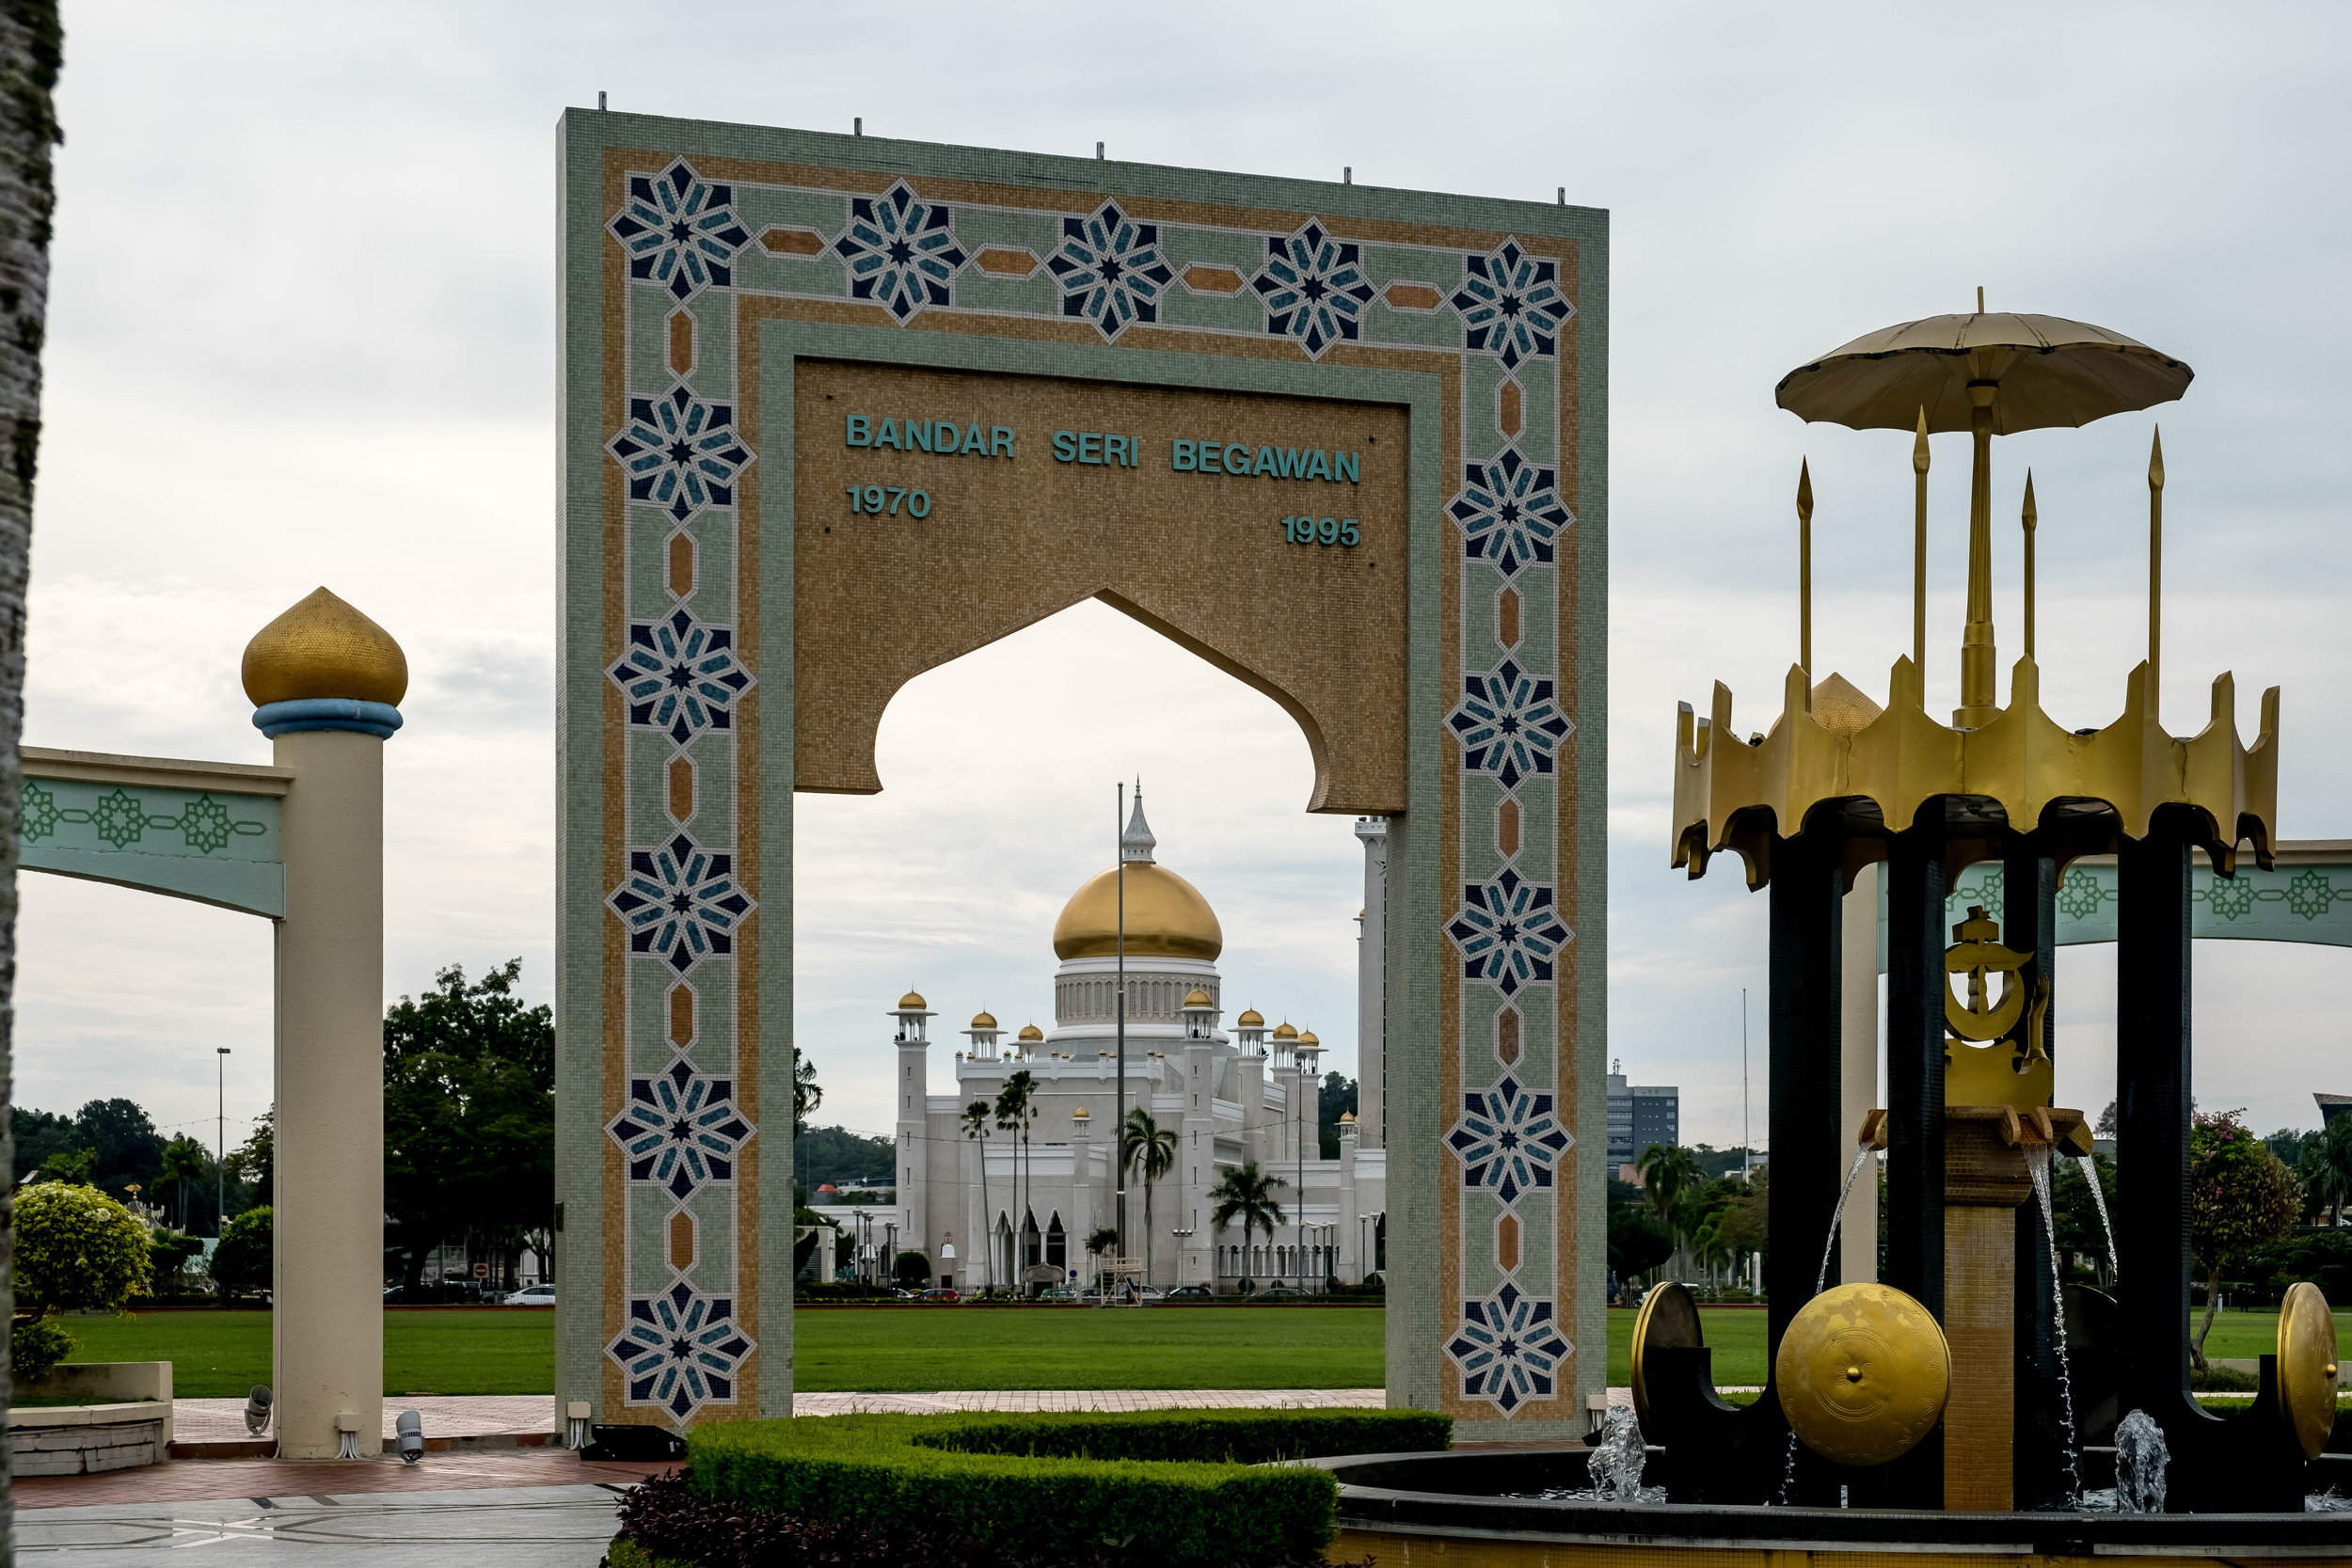  Bandar Seri Begawan - capital of Brunei 